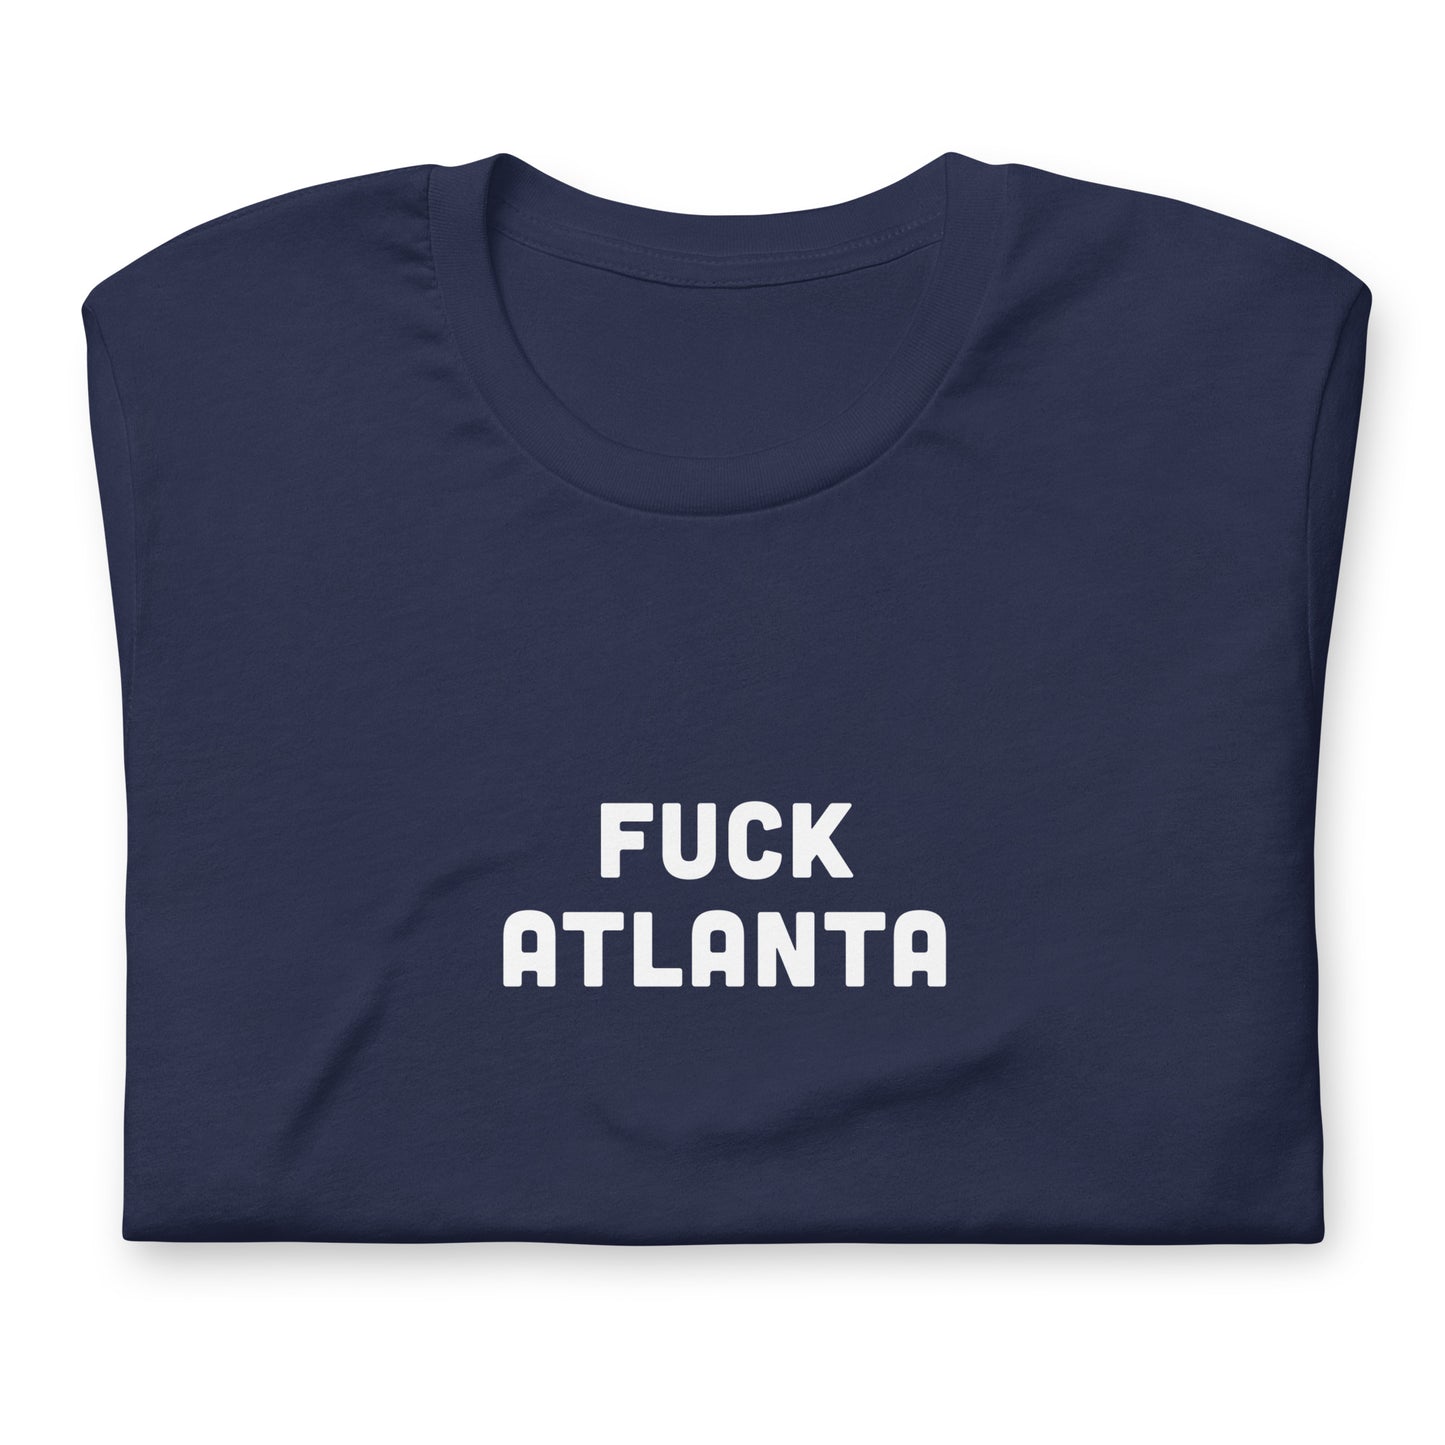 Fuck Atlanta T-Shirt Size S Color Navy